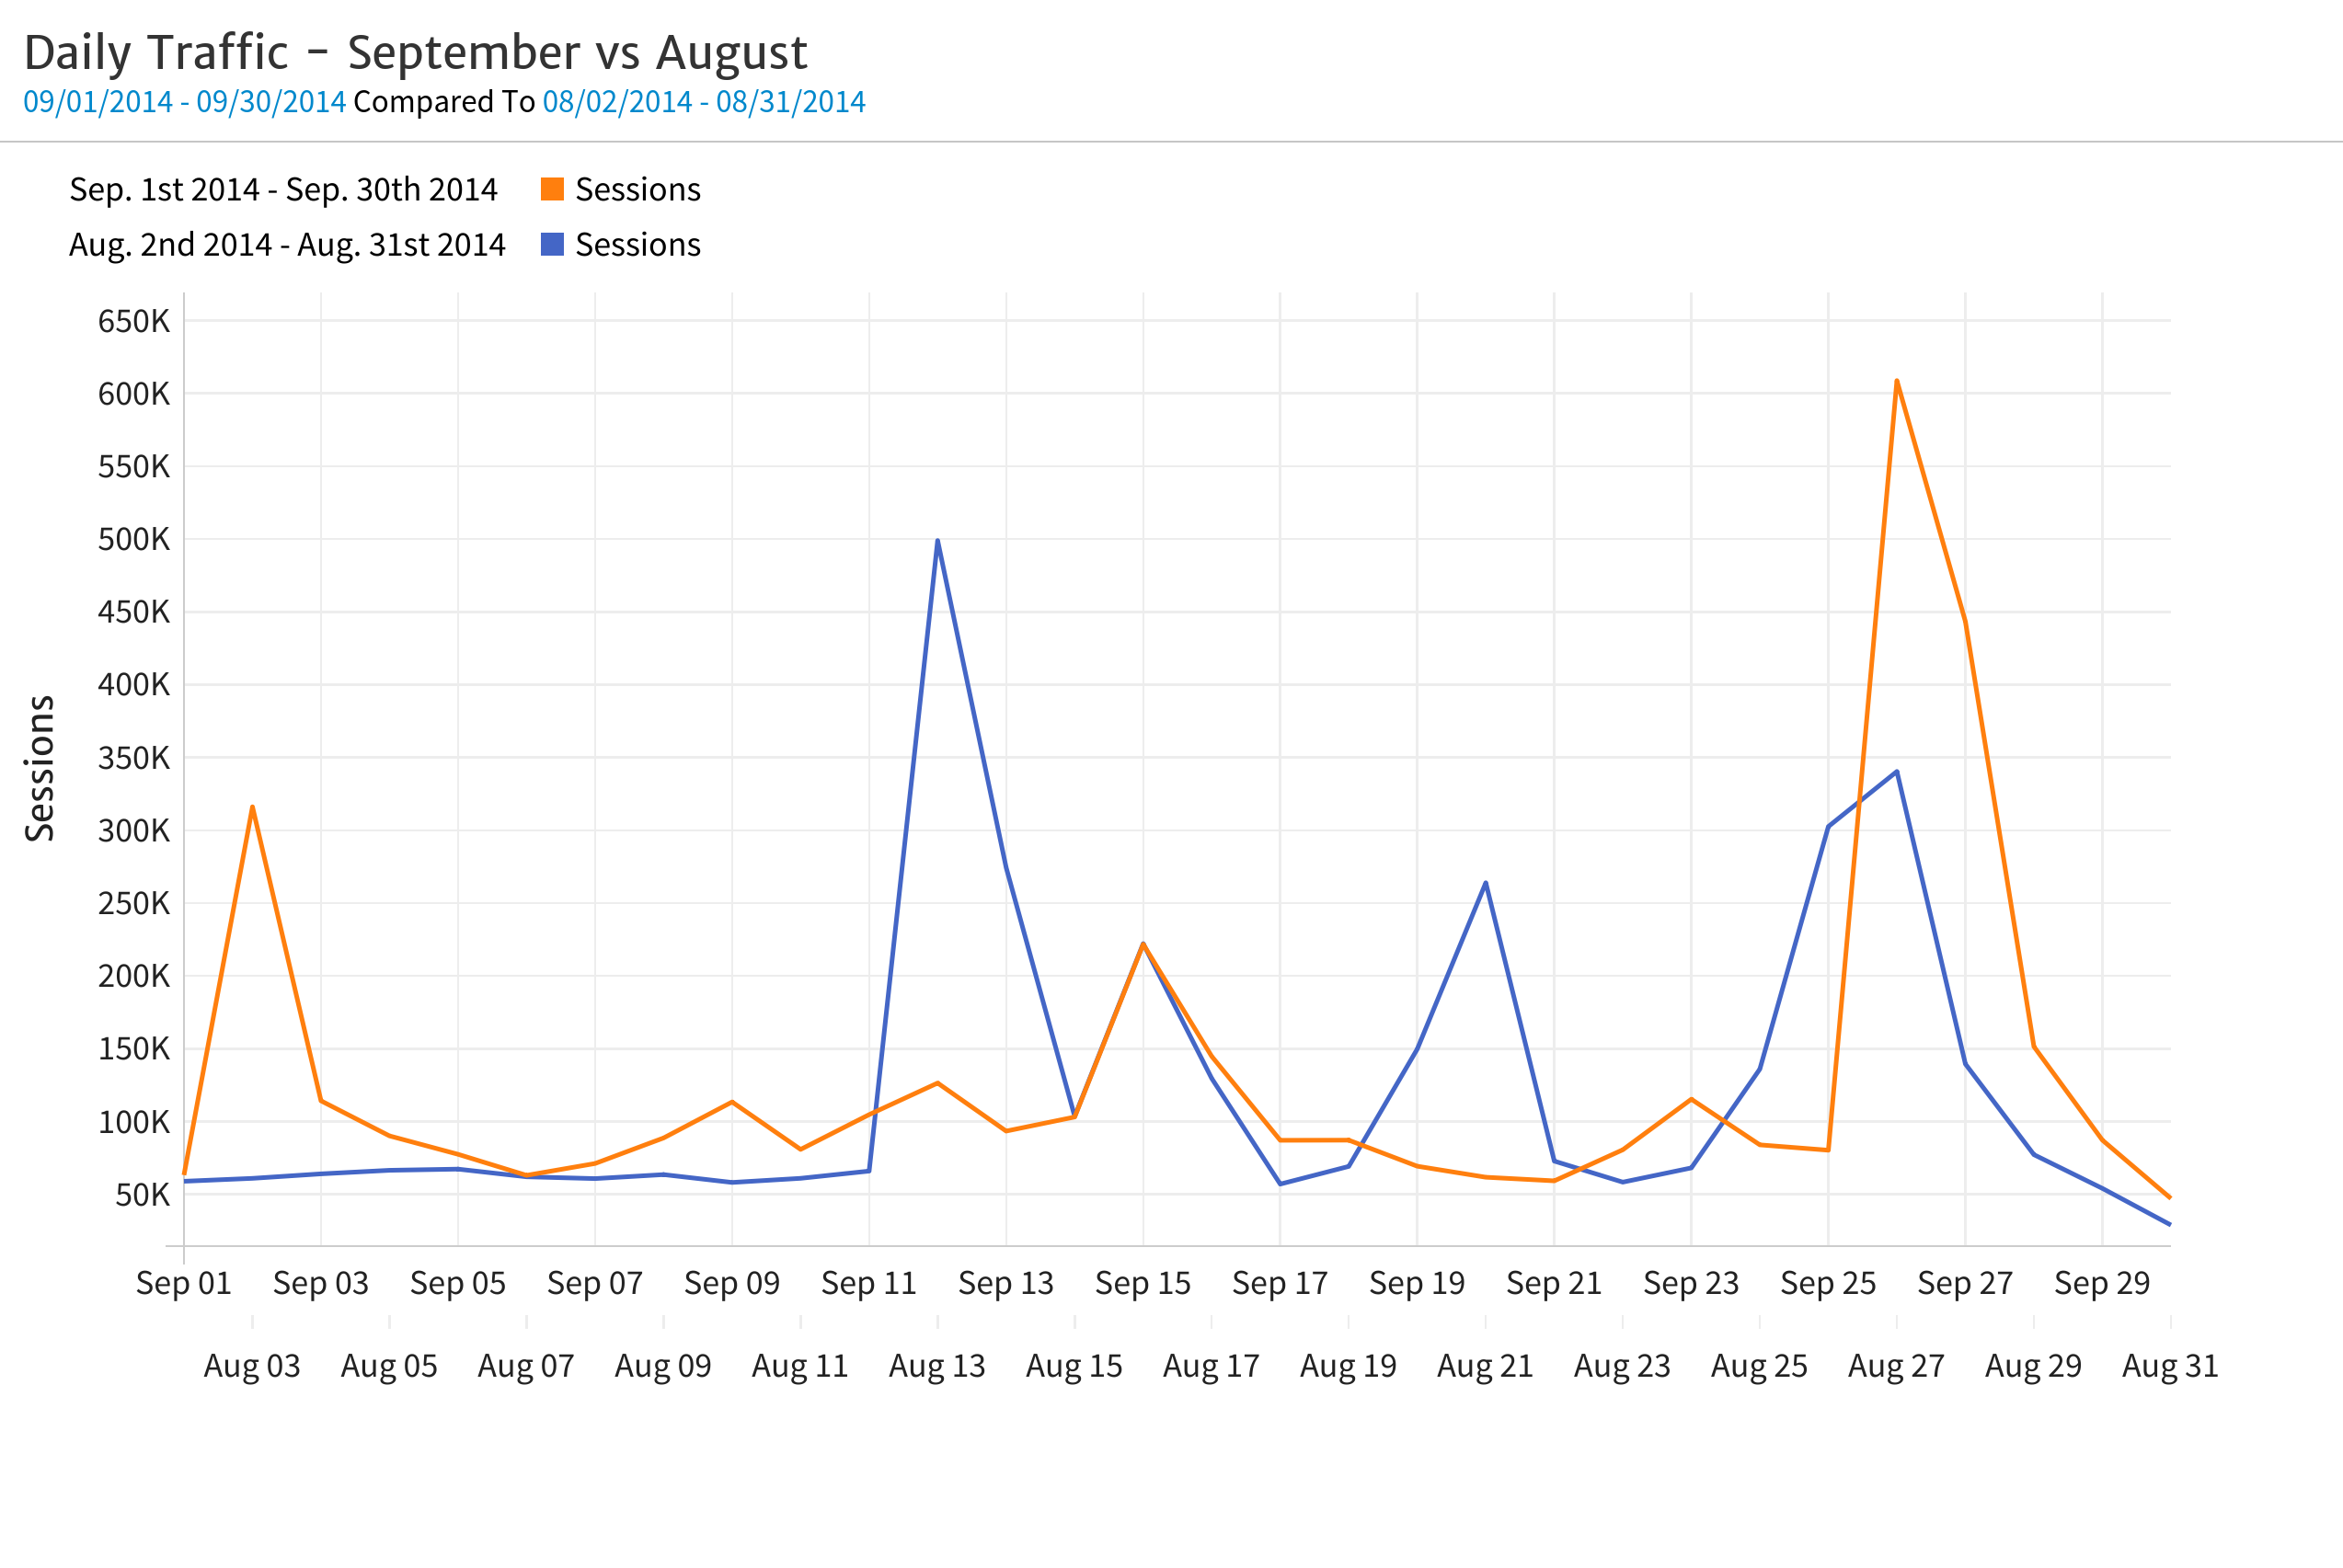 Megalytic chart comparing daily website traffic for August vs September